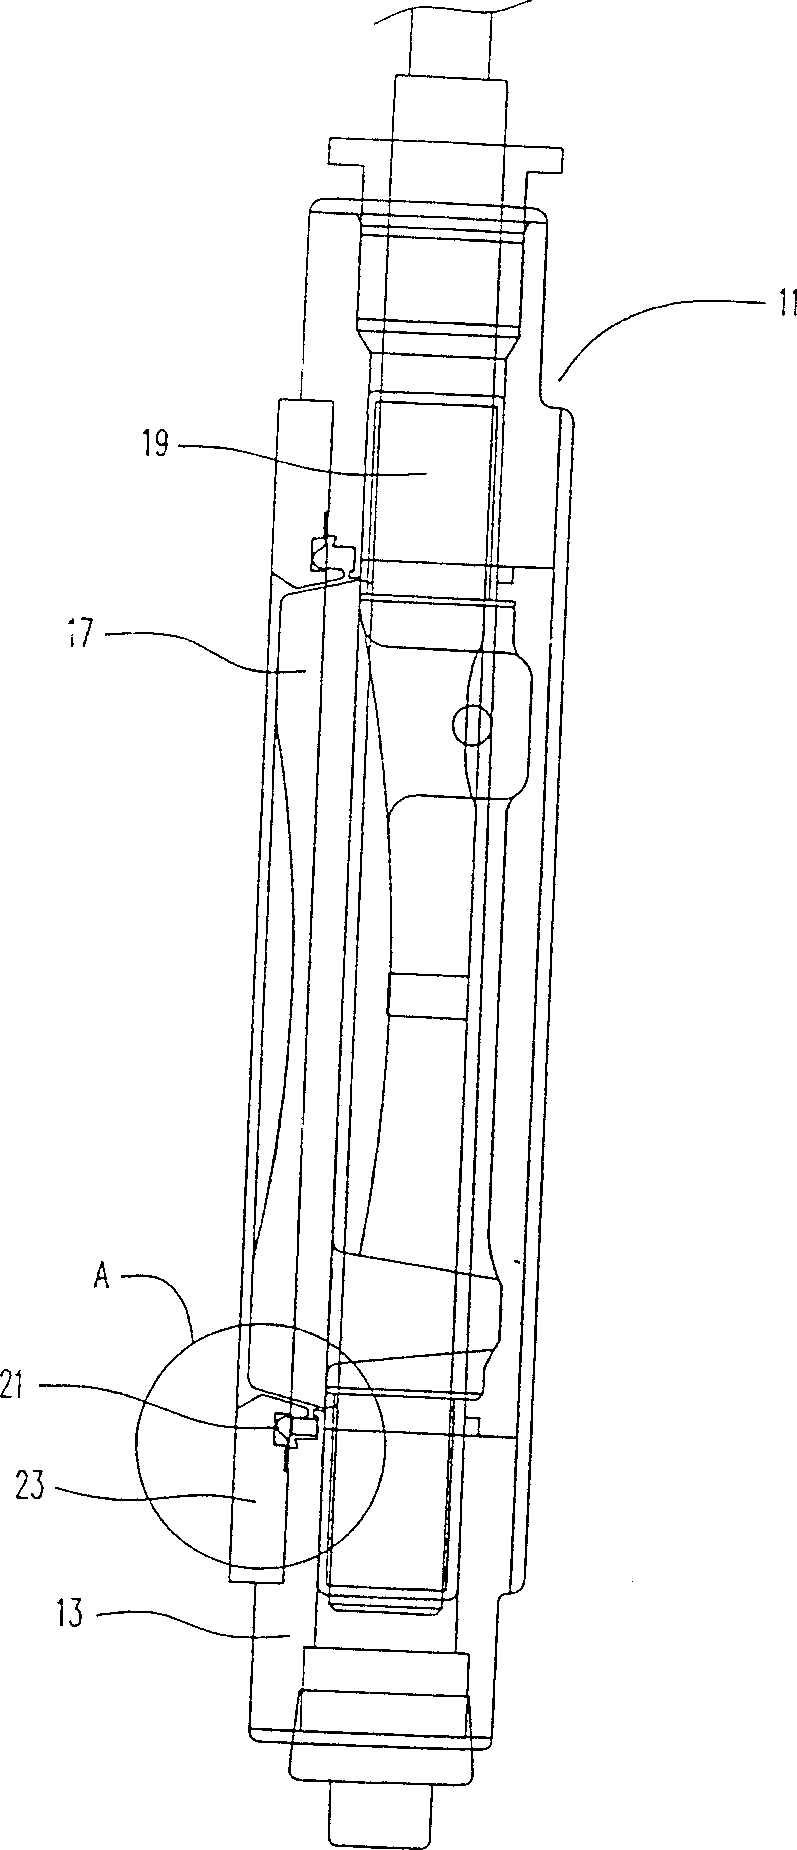 Bi-directinoal valve seal mechanism